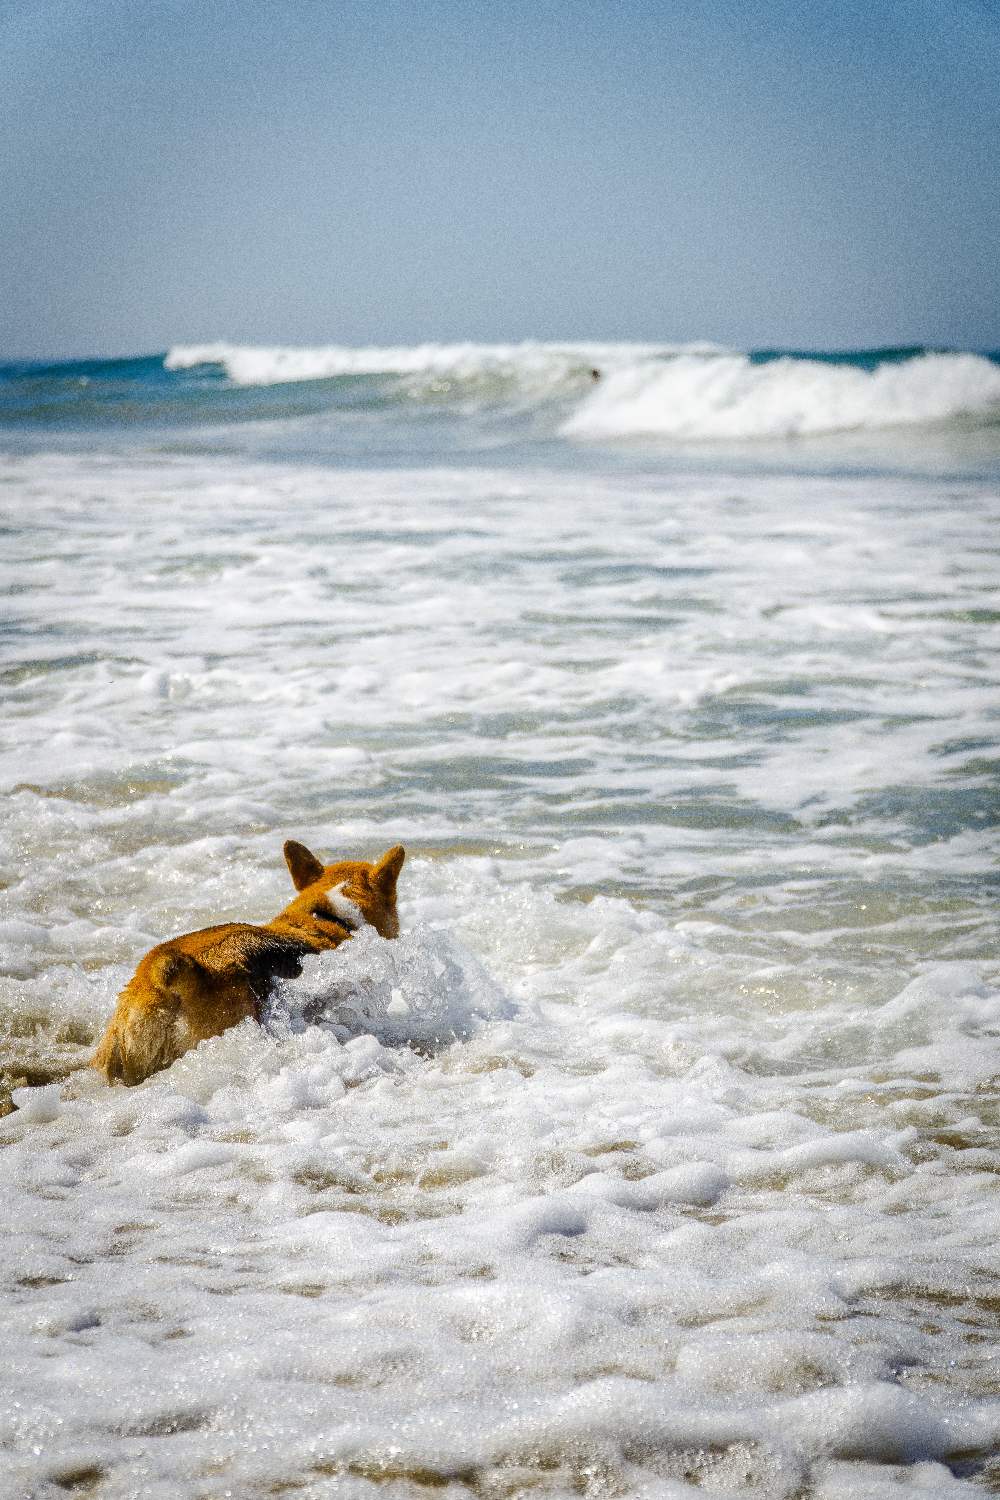 Dog swimming in the sea